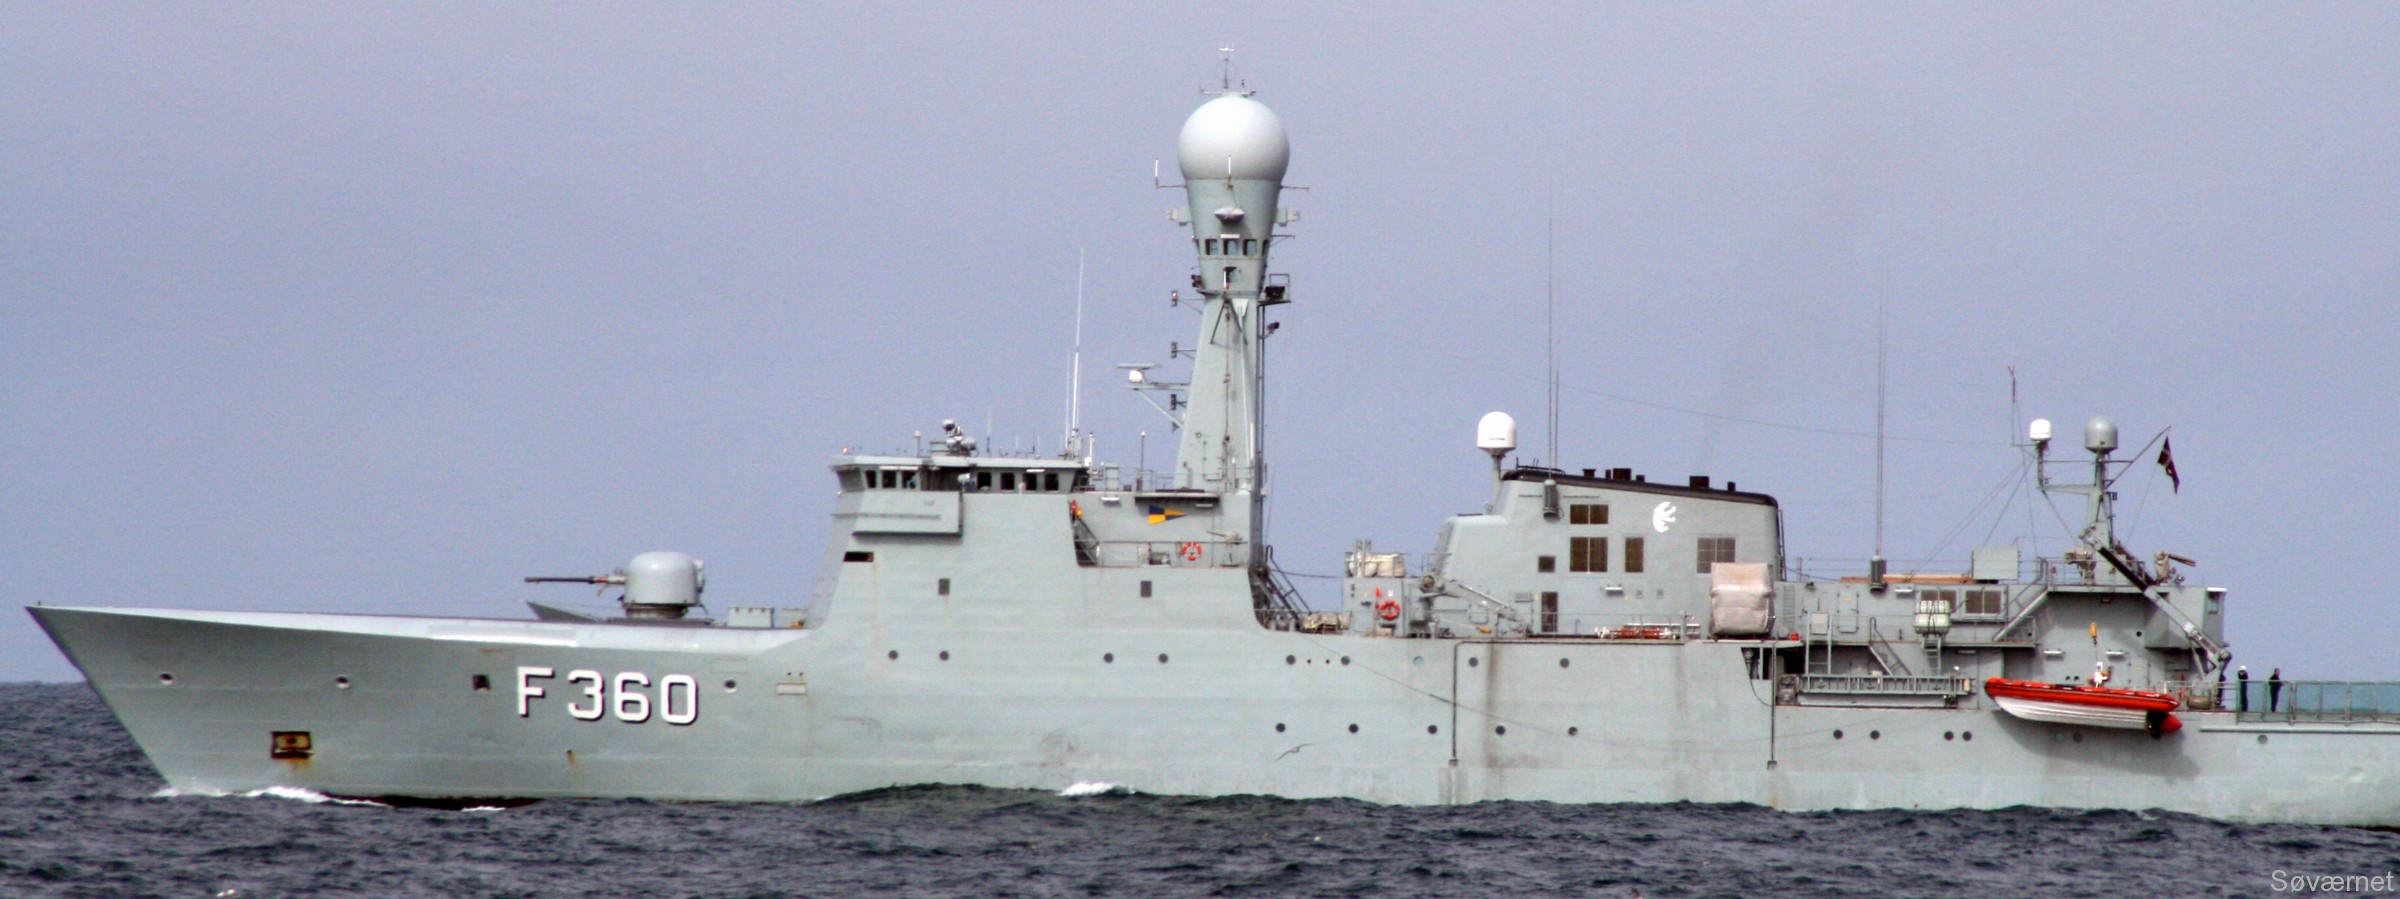 f-360 hdms hvidbjornen thetis class ocean patrol frigate royal danish navy kongelige danske marine kdm inspektionsskibet 12